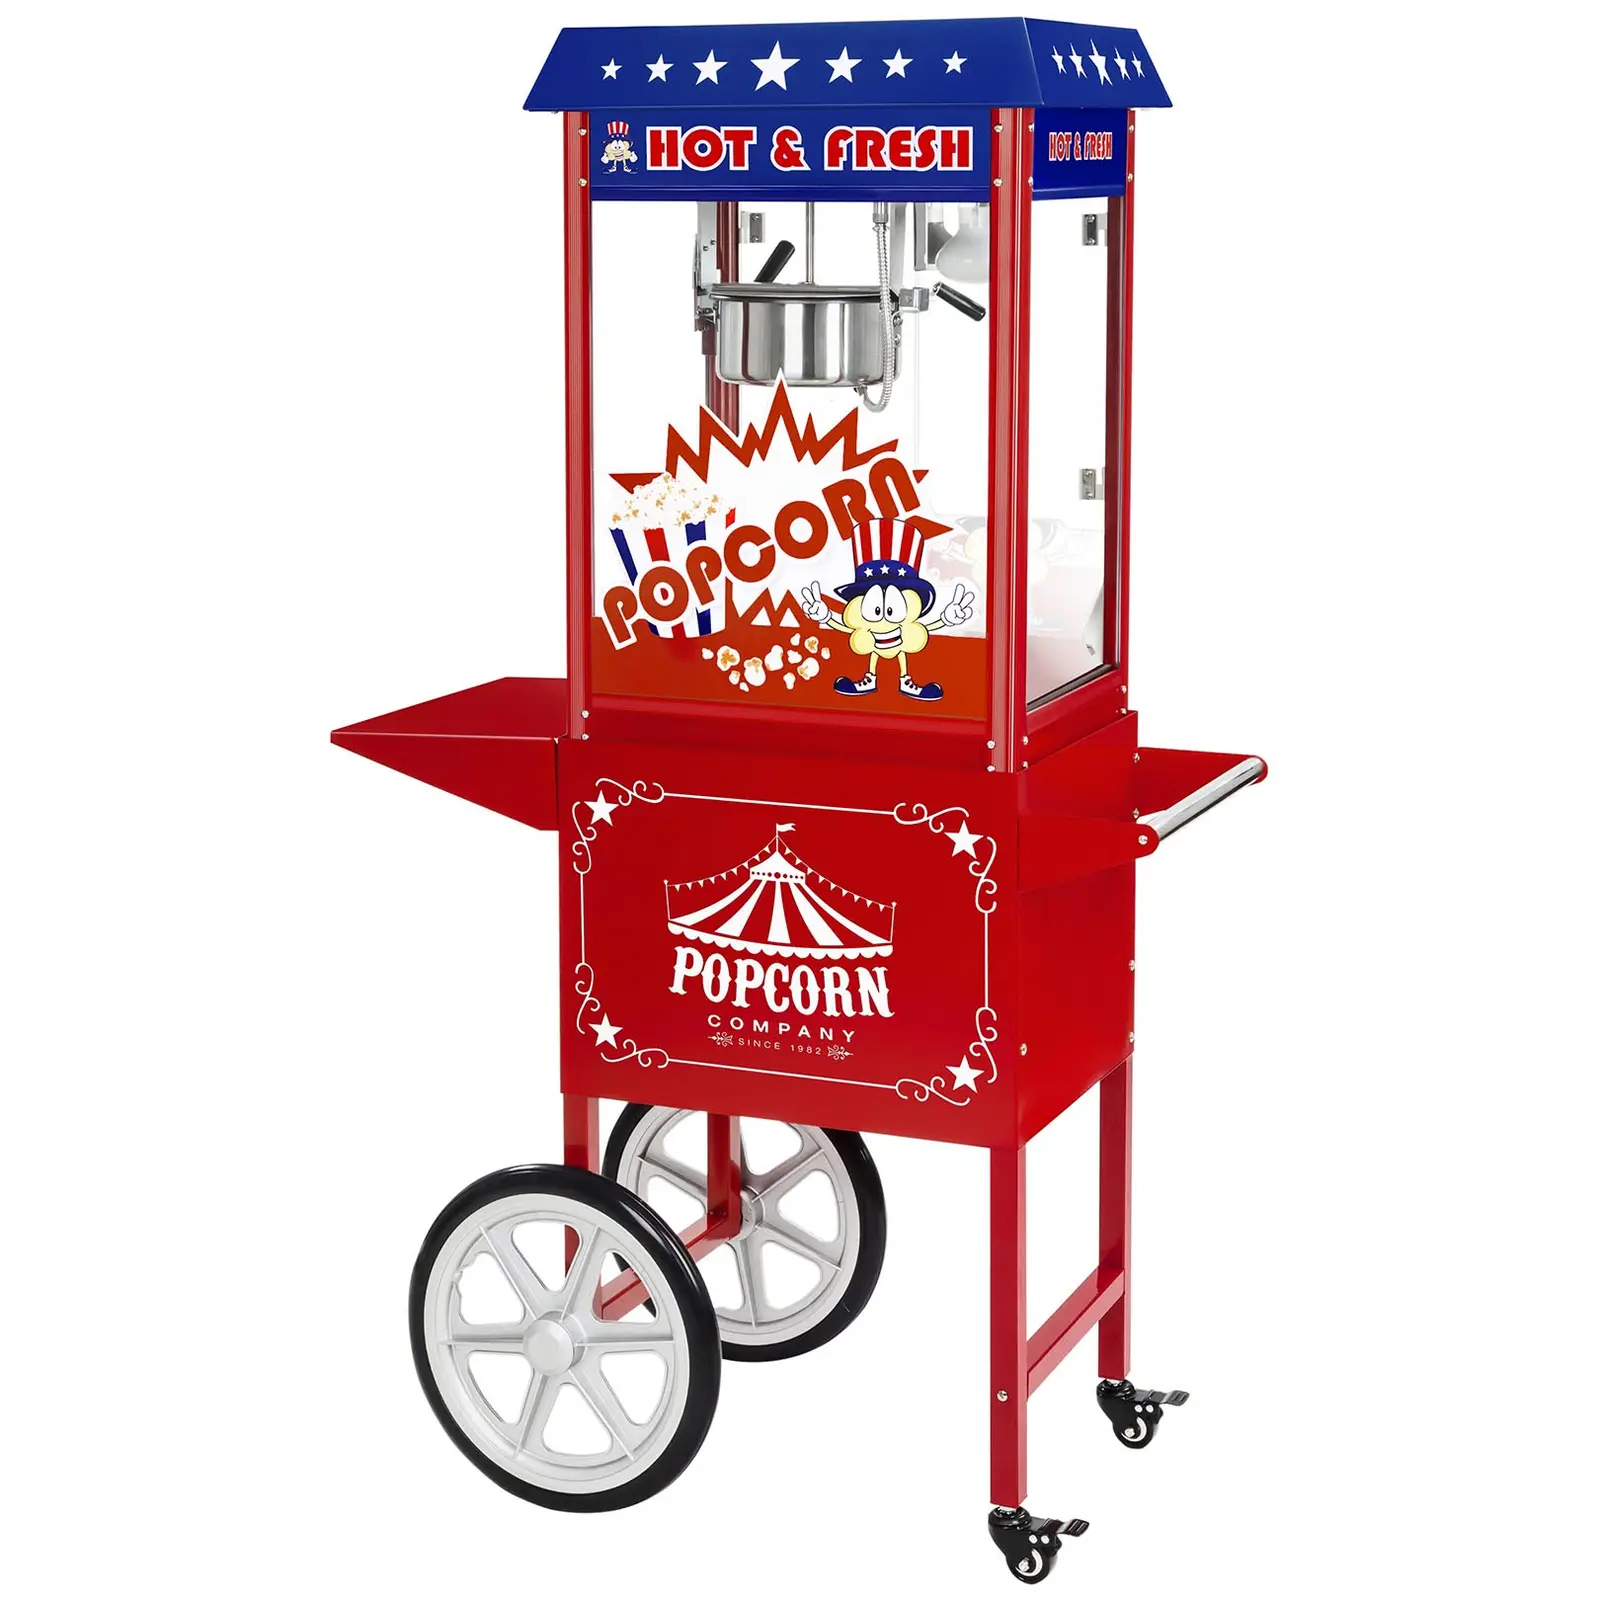 Popcorn maker - Trolley included - American design